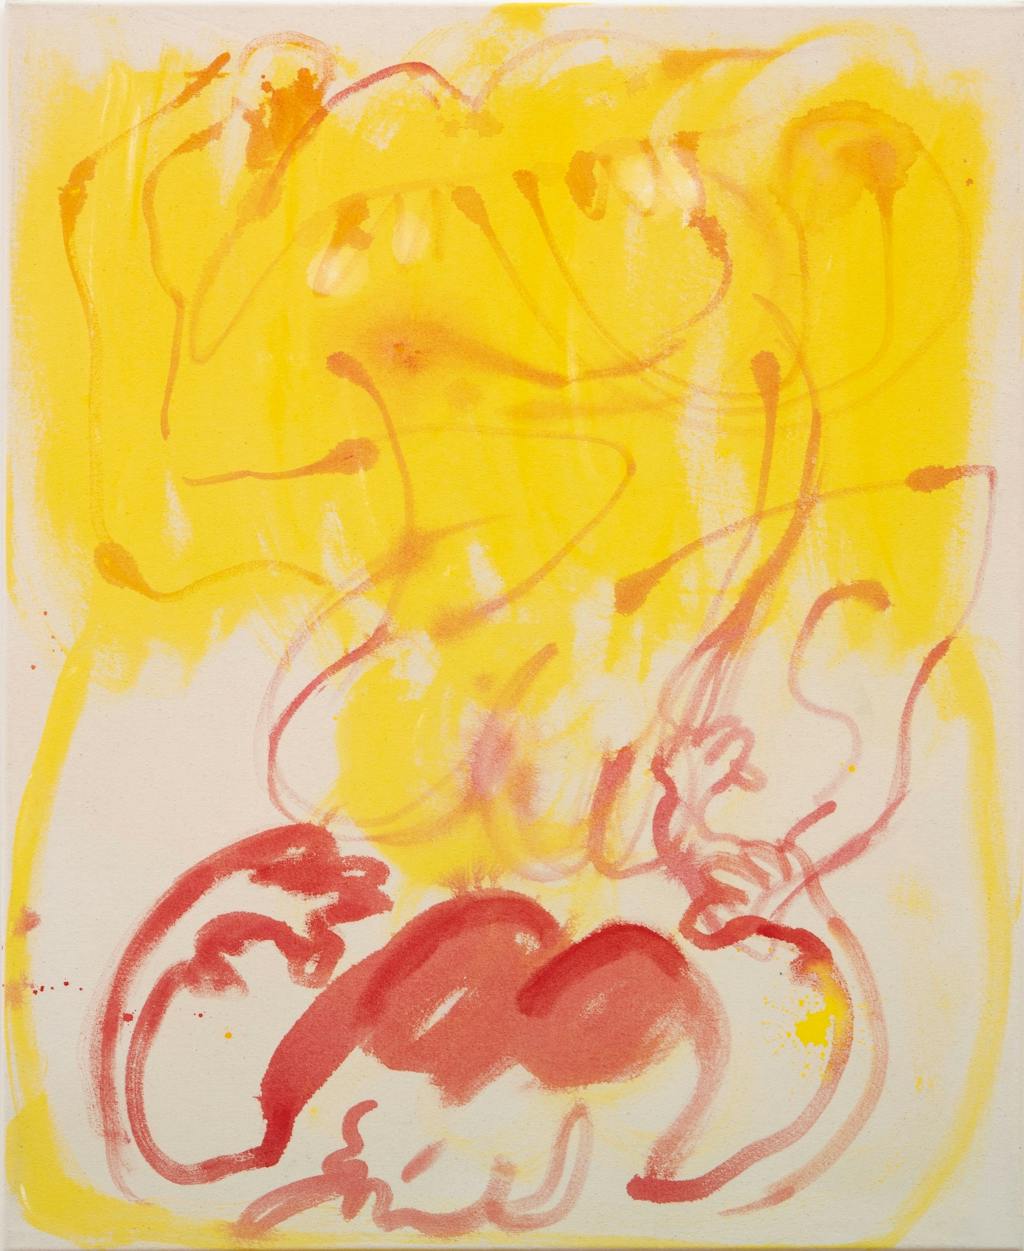 Andrea Éva Győri, Back with Light Nipples (2019), ink and gouache on canvas, 110 x 90 cm. Photo: Robert Glas - © Photo: Robert Glas, Paris Internationale